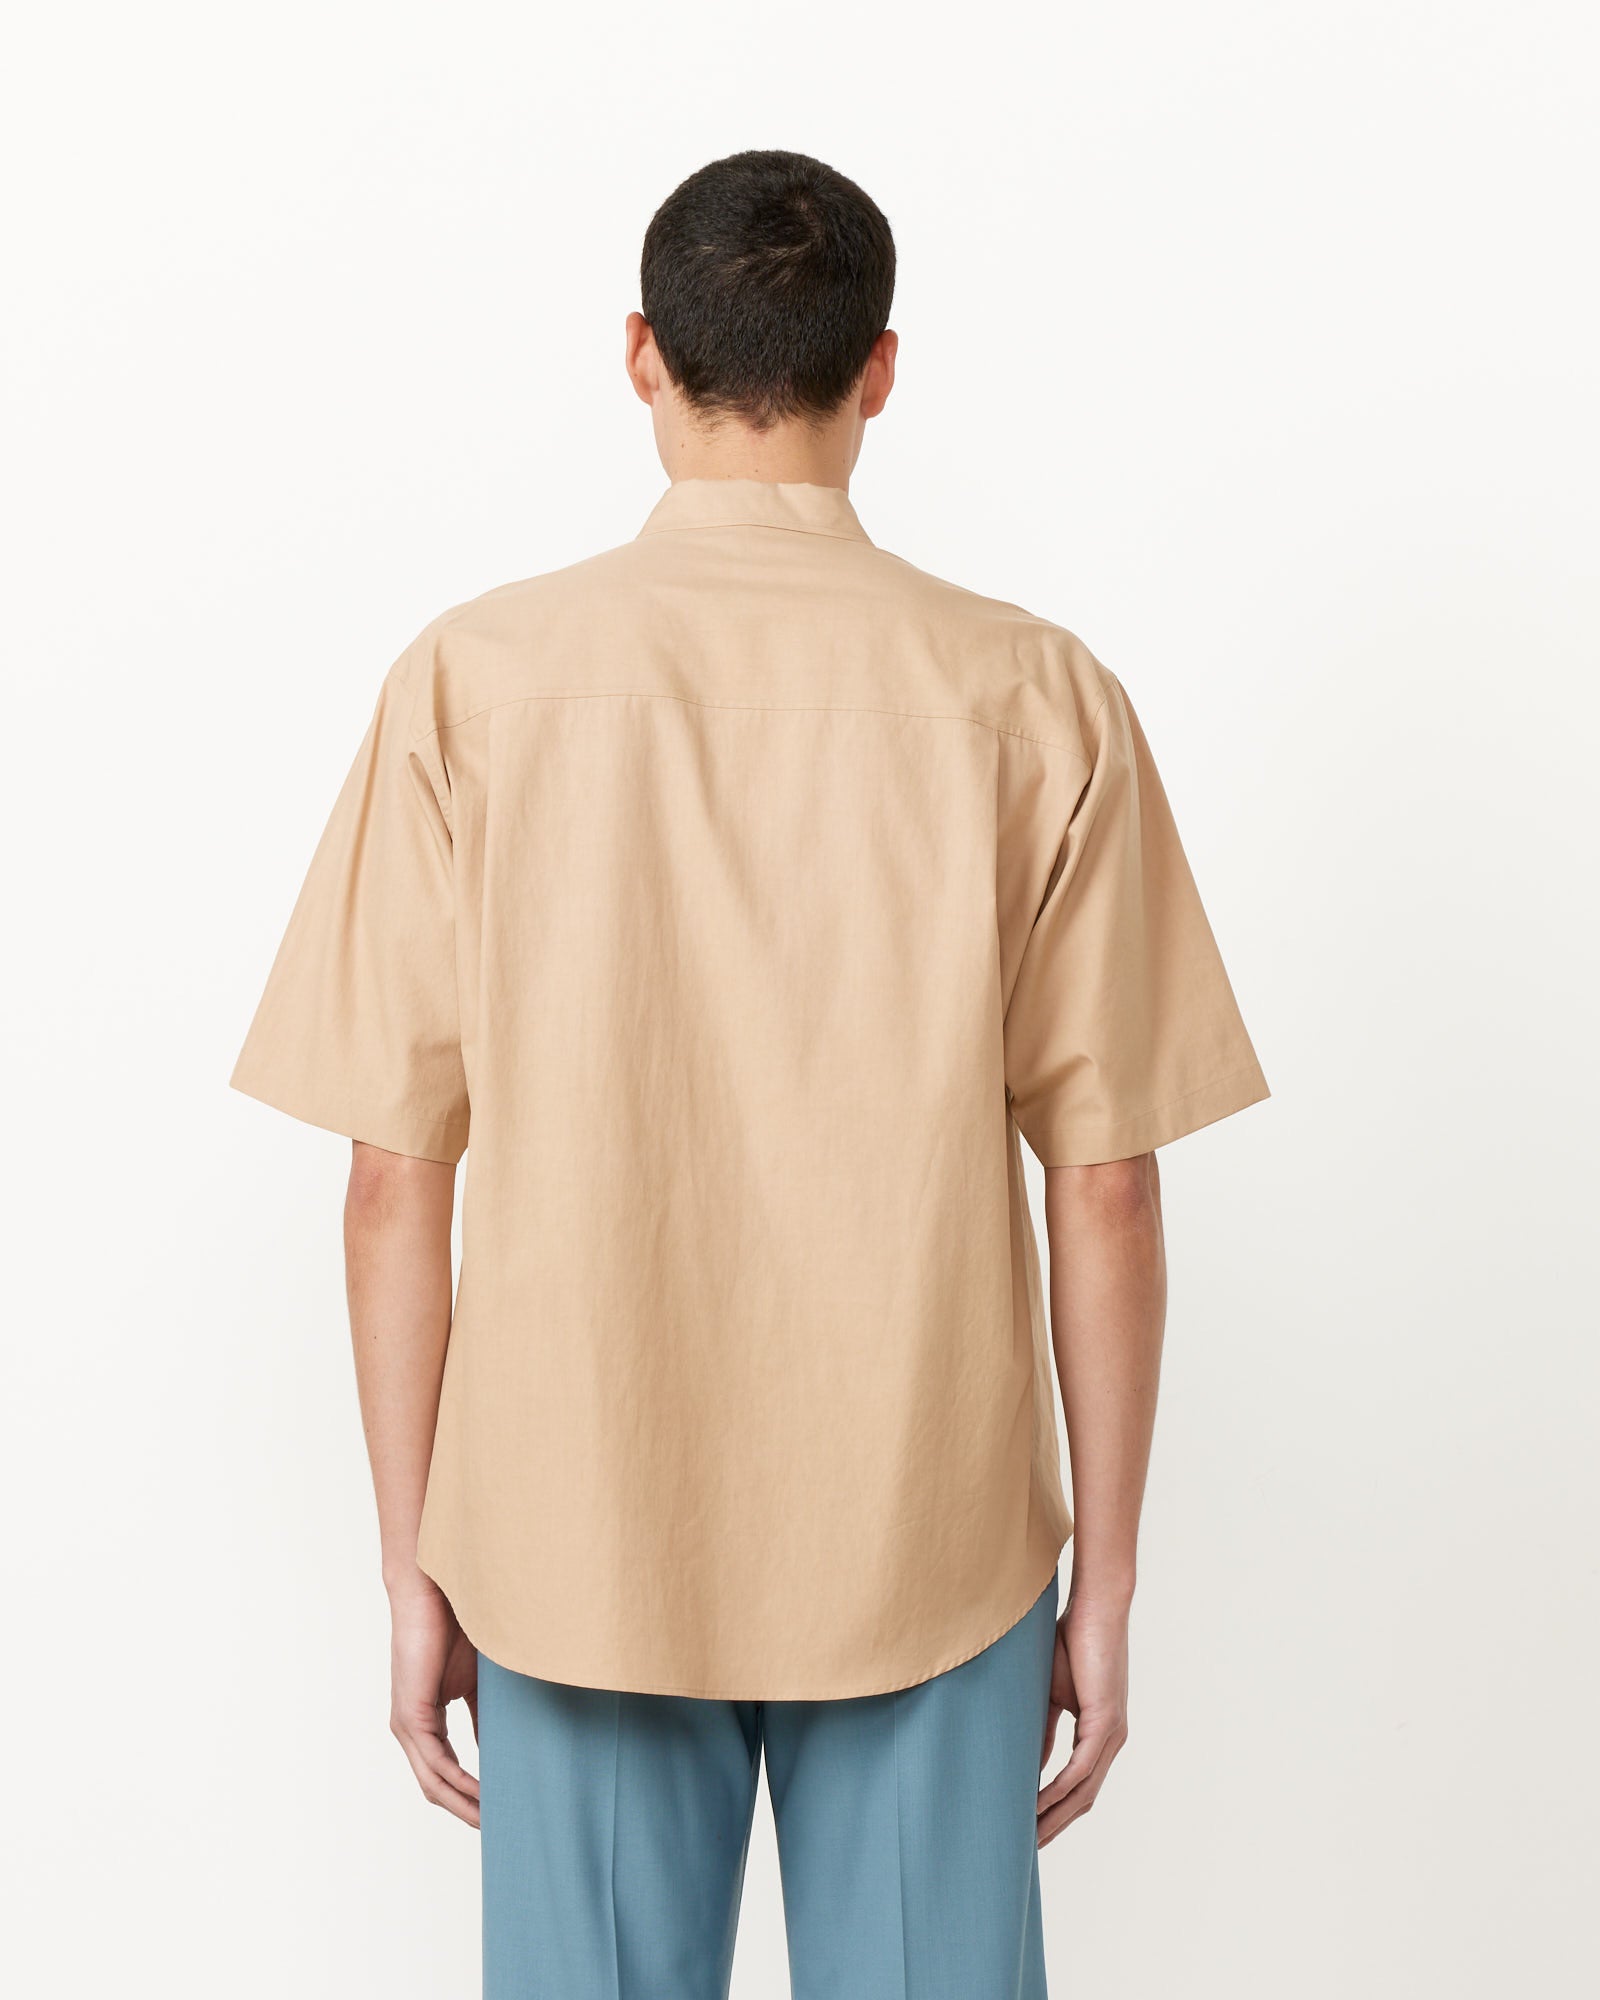 Washed Finx Twill Big Half Sleeve Shirt in Light Brown